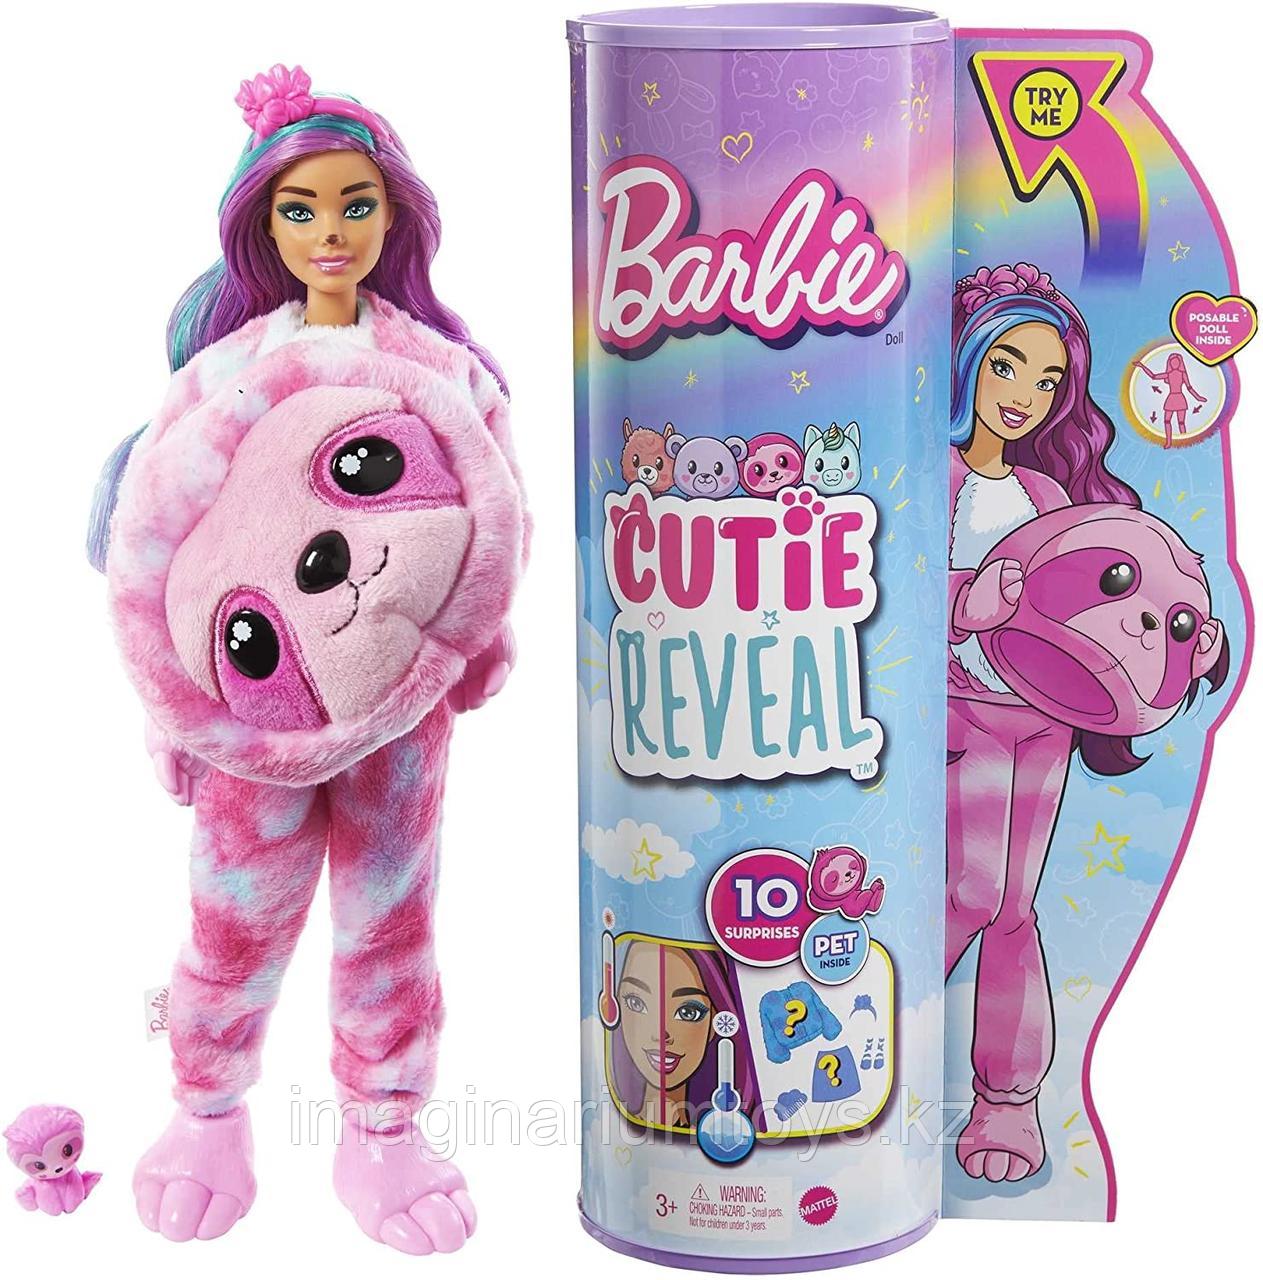 Кукла Barbie Cutie Reveal Ленивец 10 сюрпризов